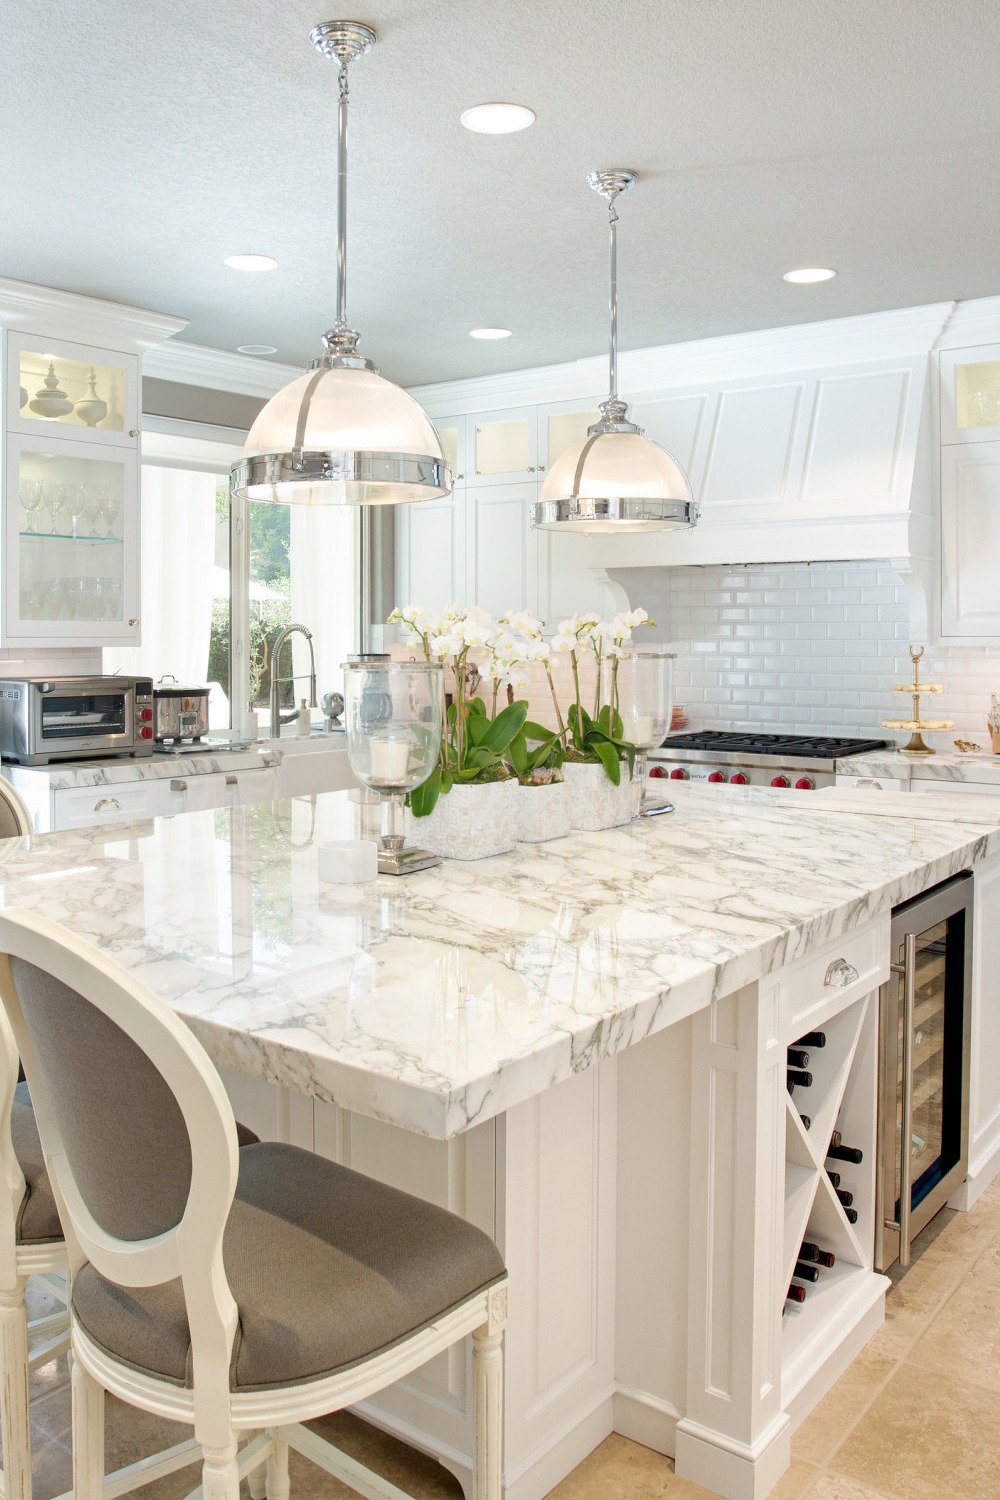 Backsplash With White Cabinets Kitchen Backsplash Travertine Floor Pendant Lights Calacatta Gold Marble Counters